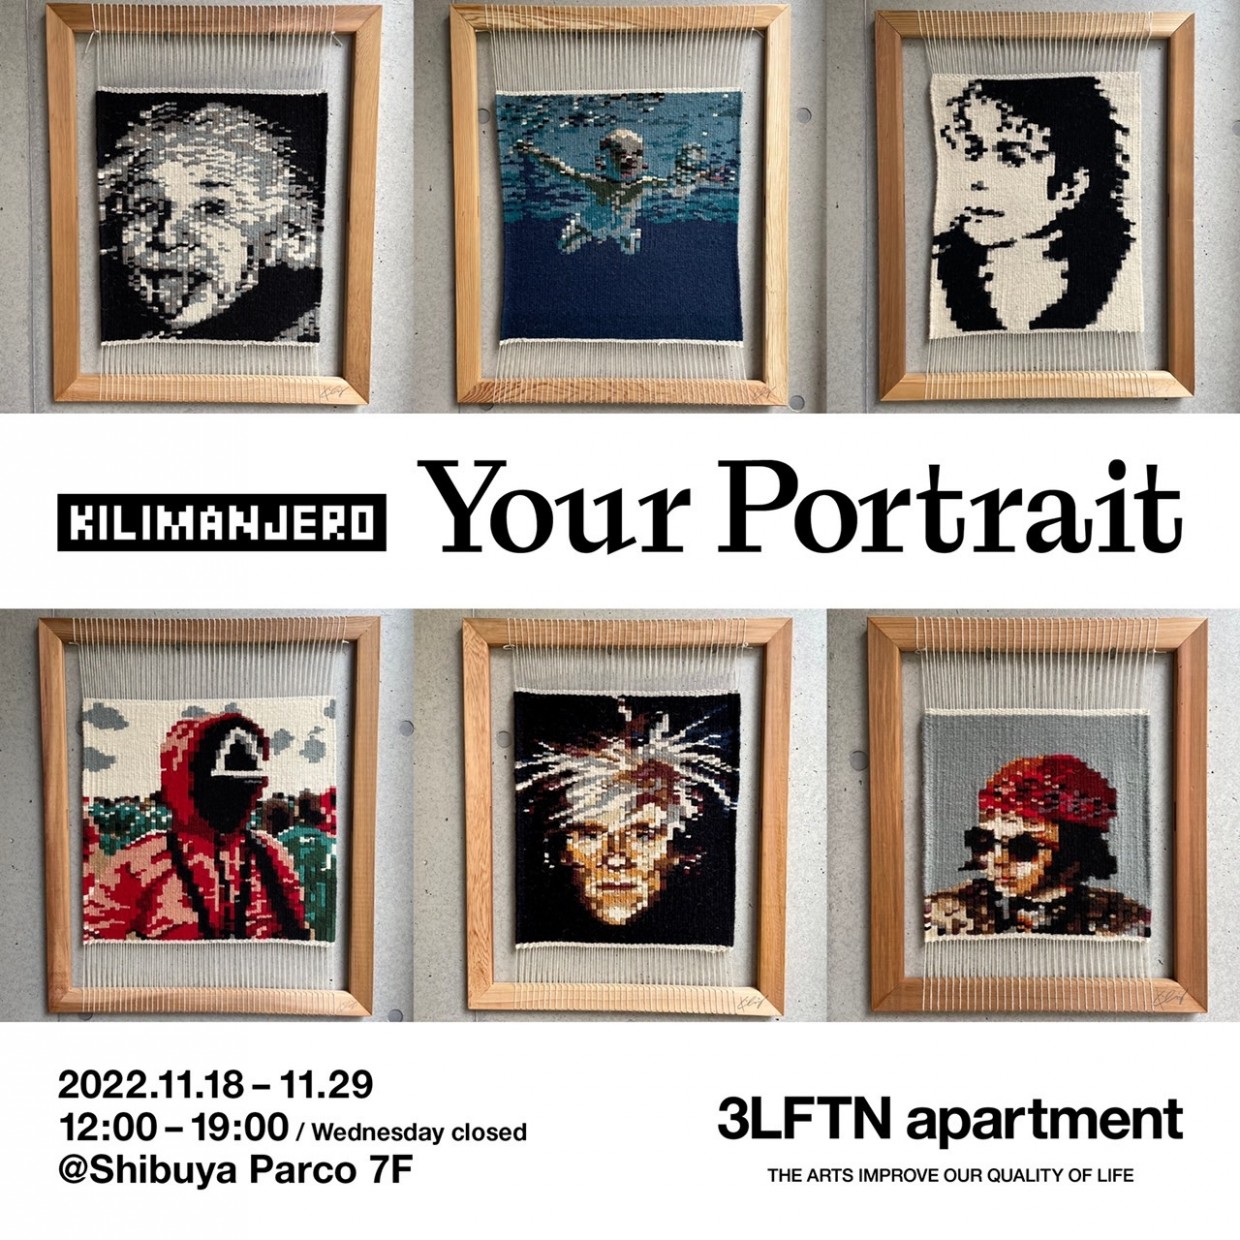 3LFTN apartment Kilimanjero個展「Your Portrait 」